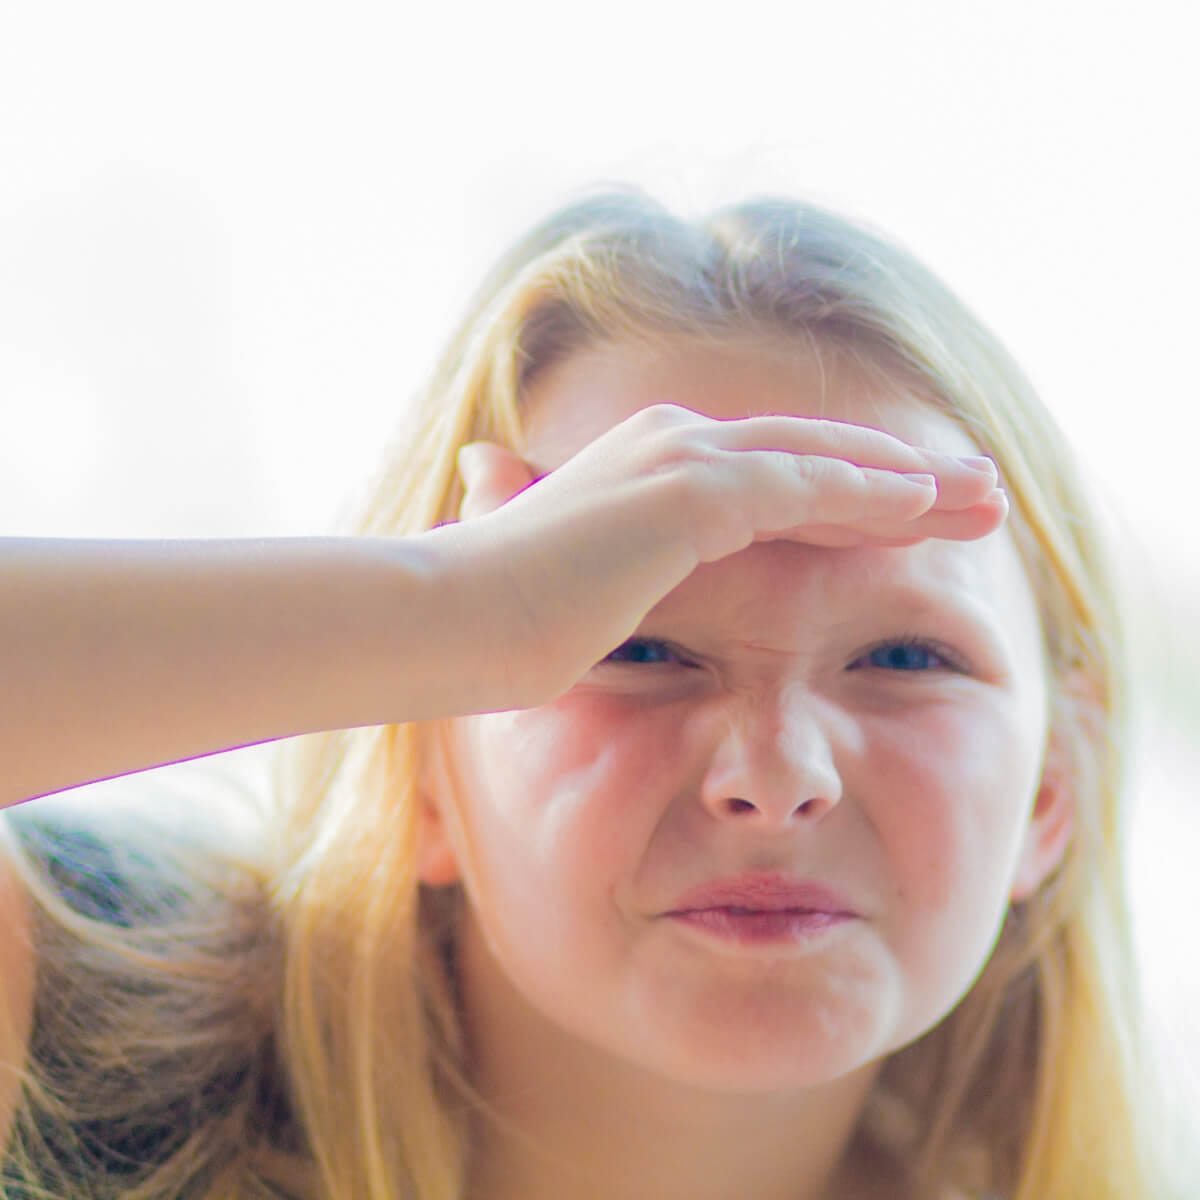 Is My Child's Myopia Worsening?